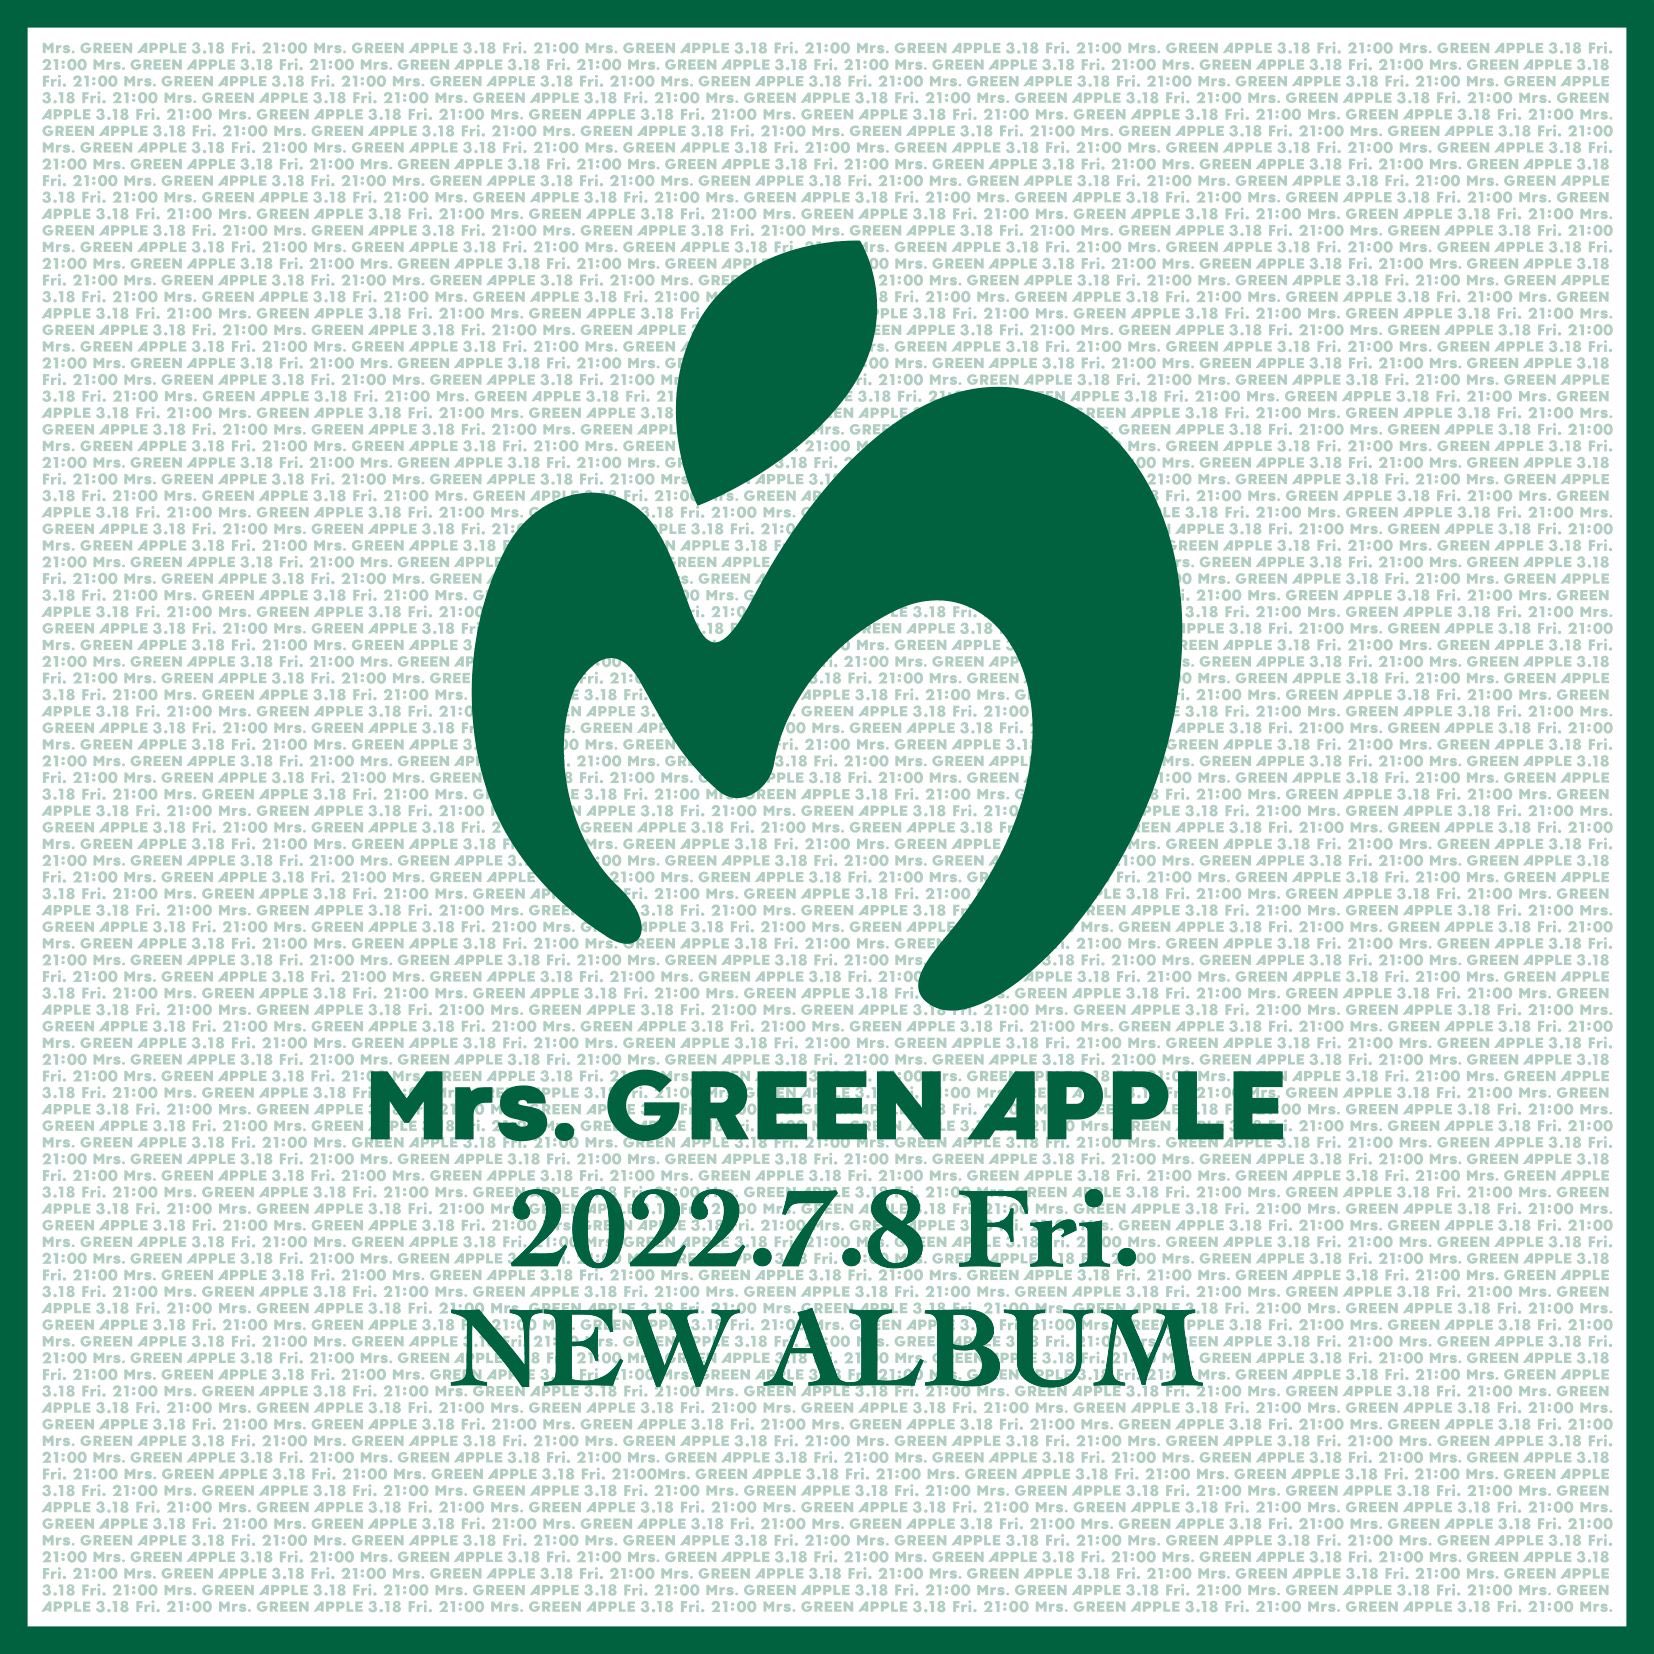 Mrs Green Apple ミニアルバムリリース決定 22年7月8日 金 丸2年ぶりの新作となるミニアルバムのリリースが決定しました 先行予約も受付開始 詳細 T Co Bhg7tyj4iz Mrsgreenapple ミセス活動再開 フェーズ2開幕 ミセス7月8日